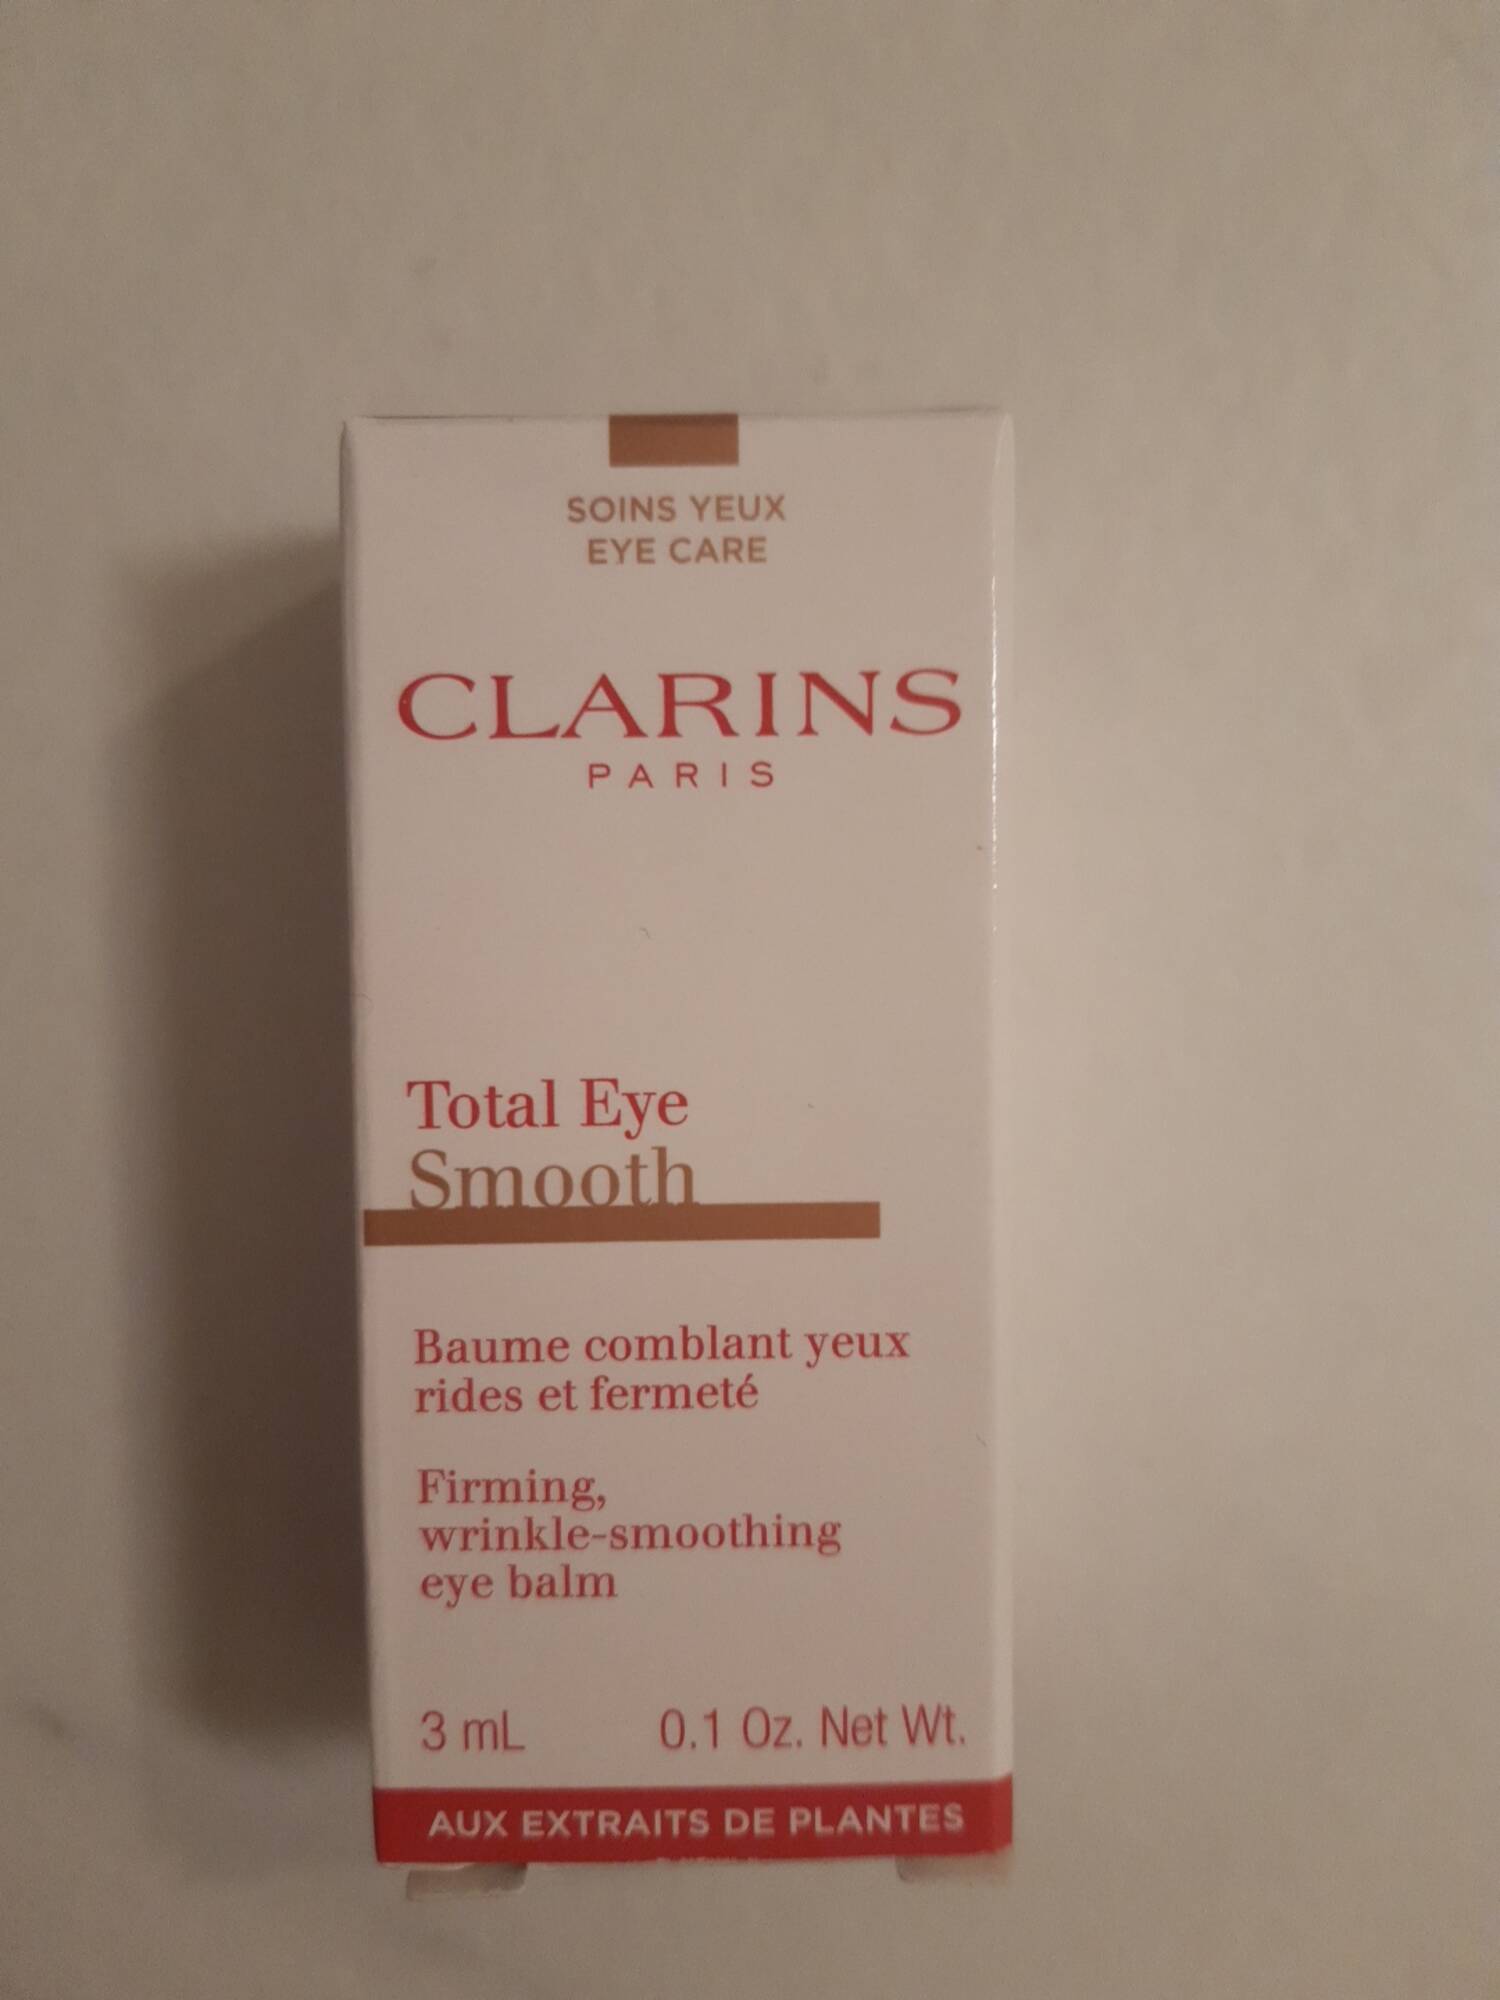 CLARINS - Total eye smooth - Baume comblant yeux rides et fermeté